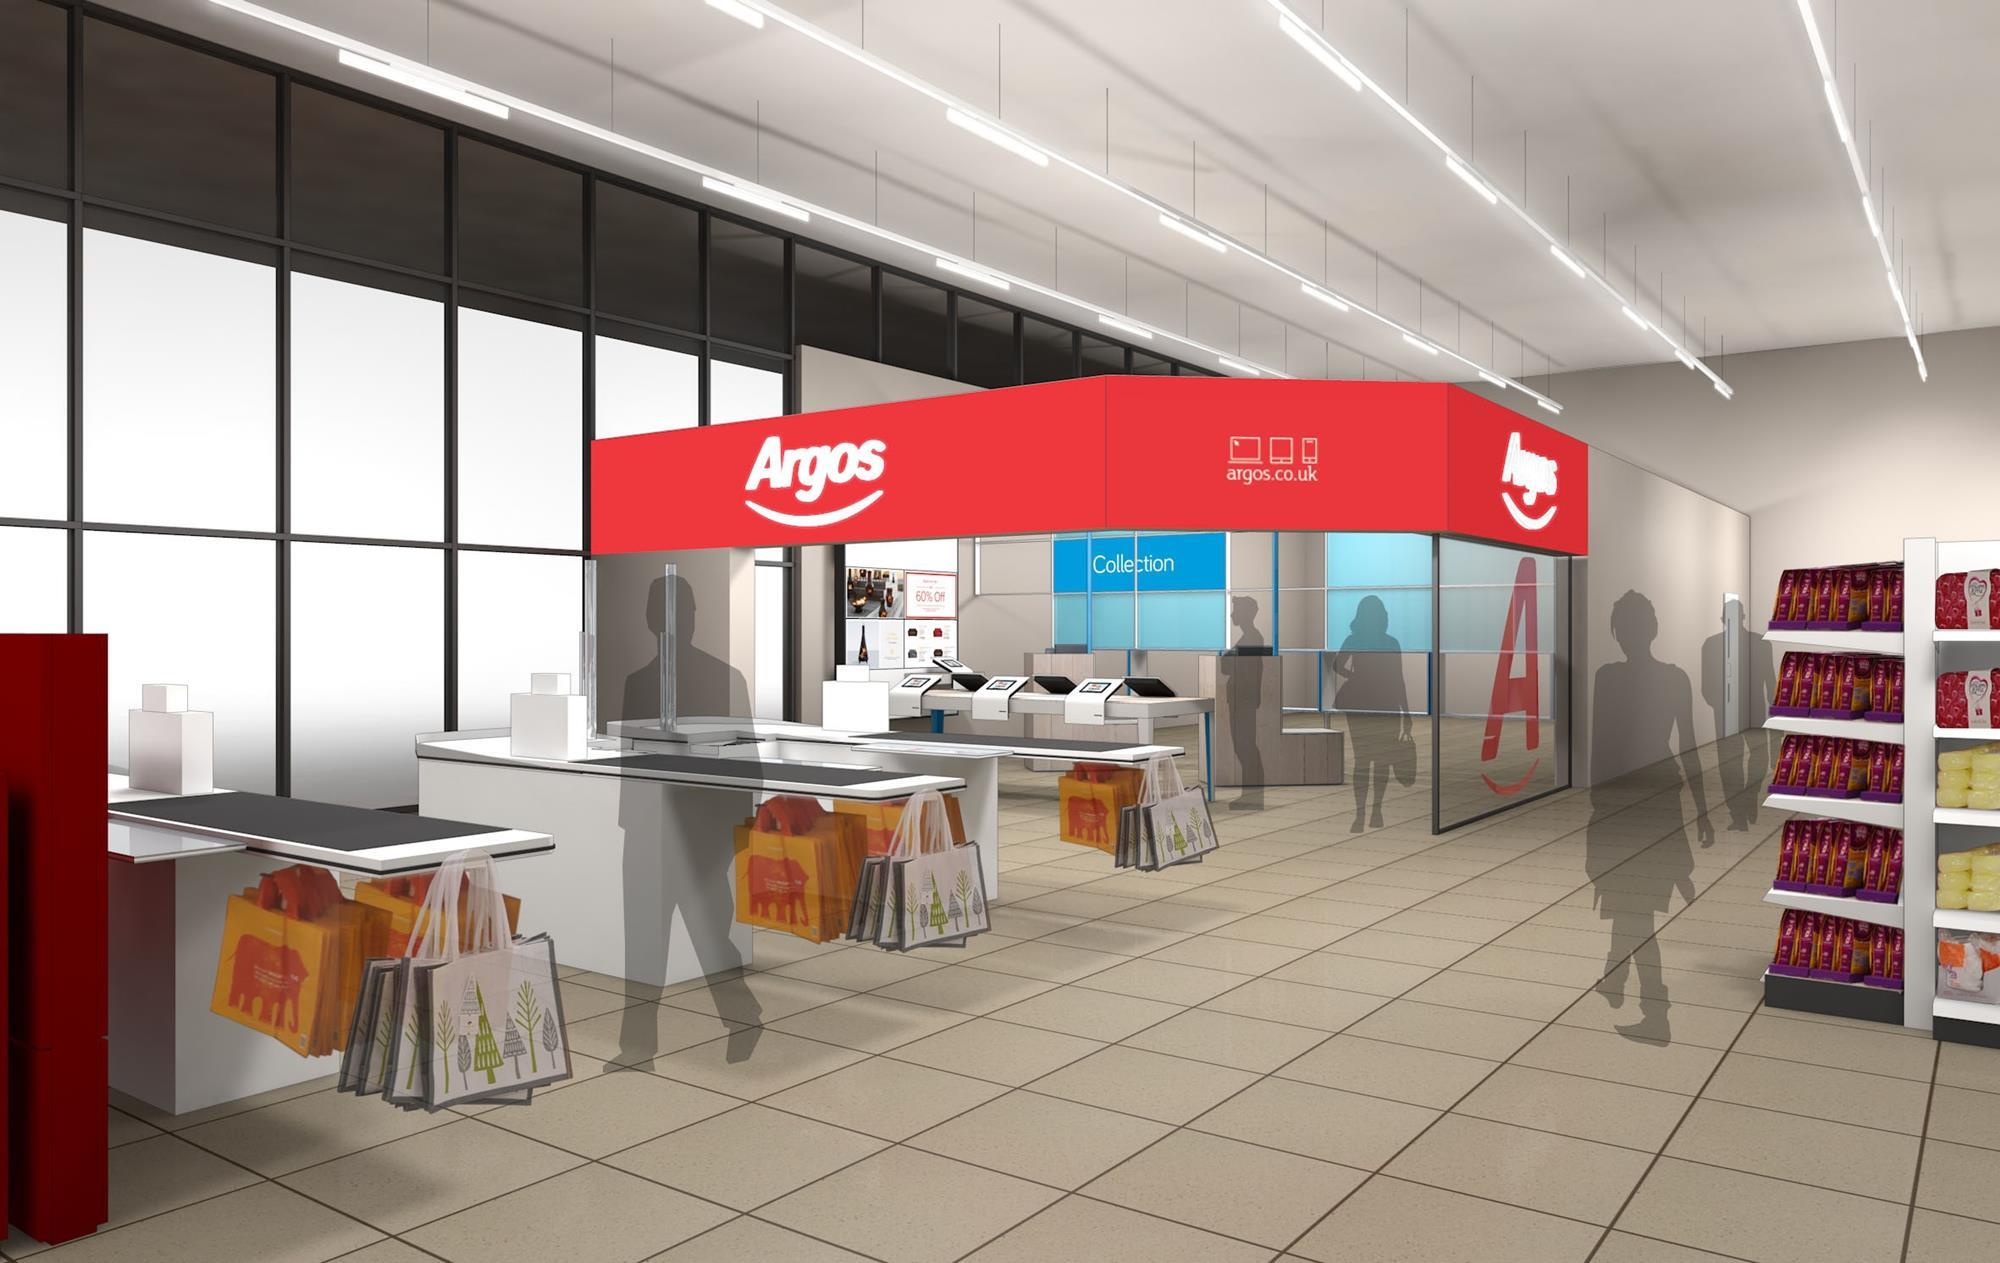 Argos to open digital stores in Sainsbury's supermarkets, News